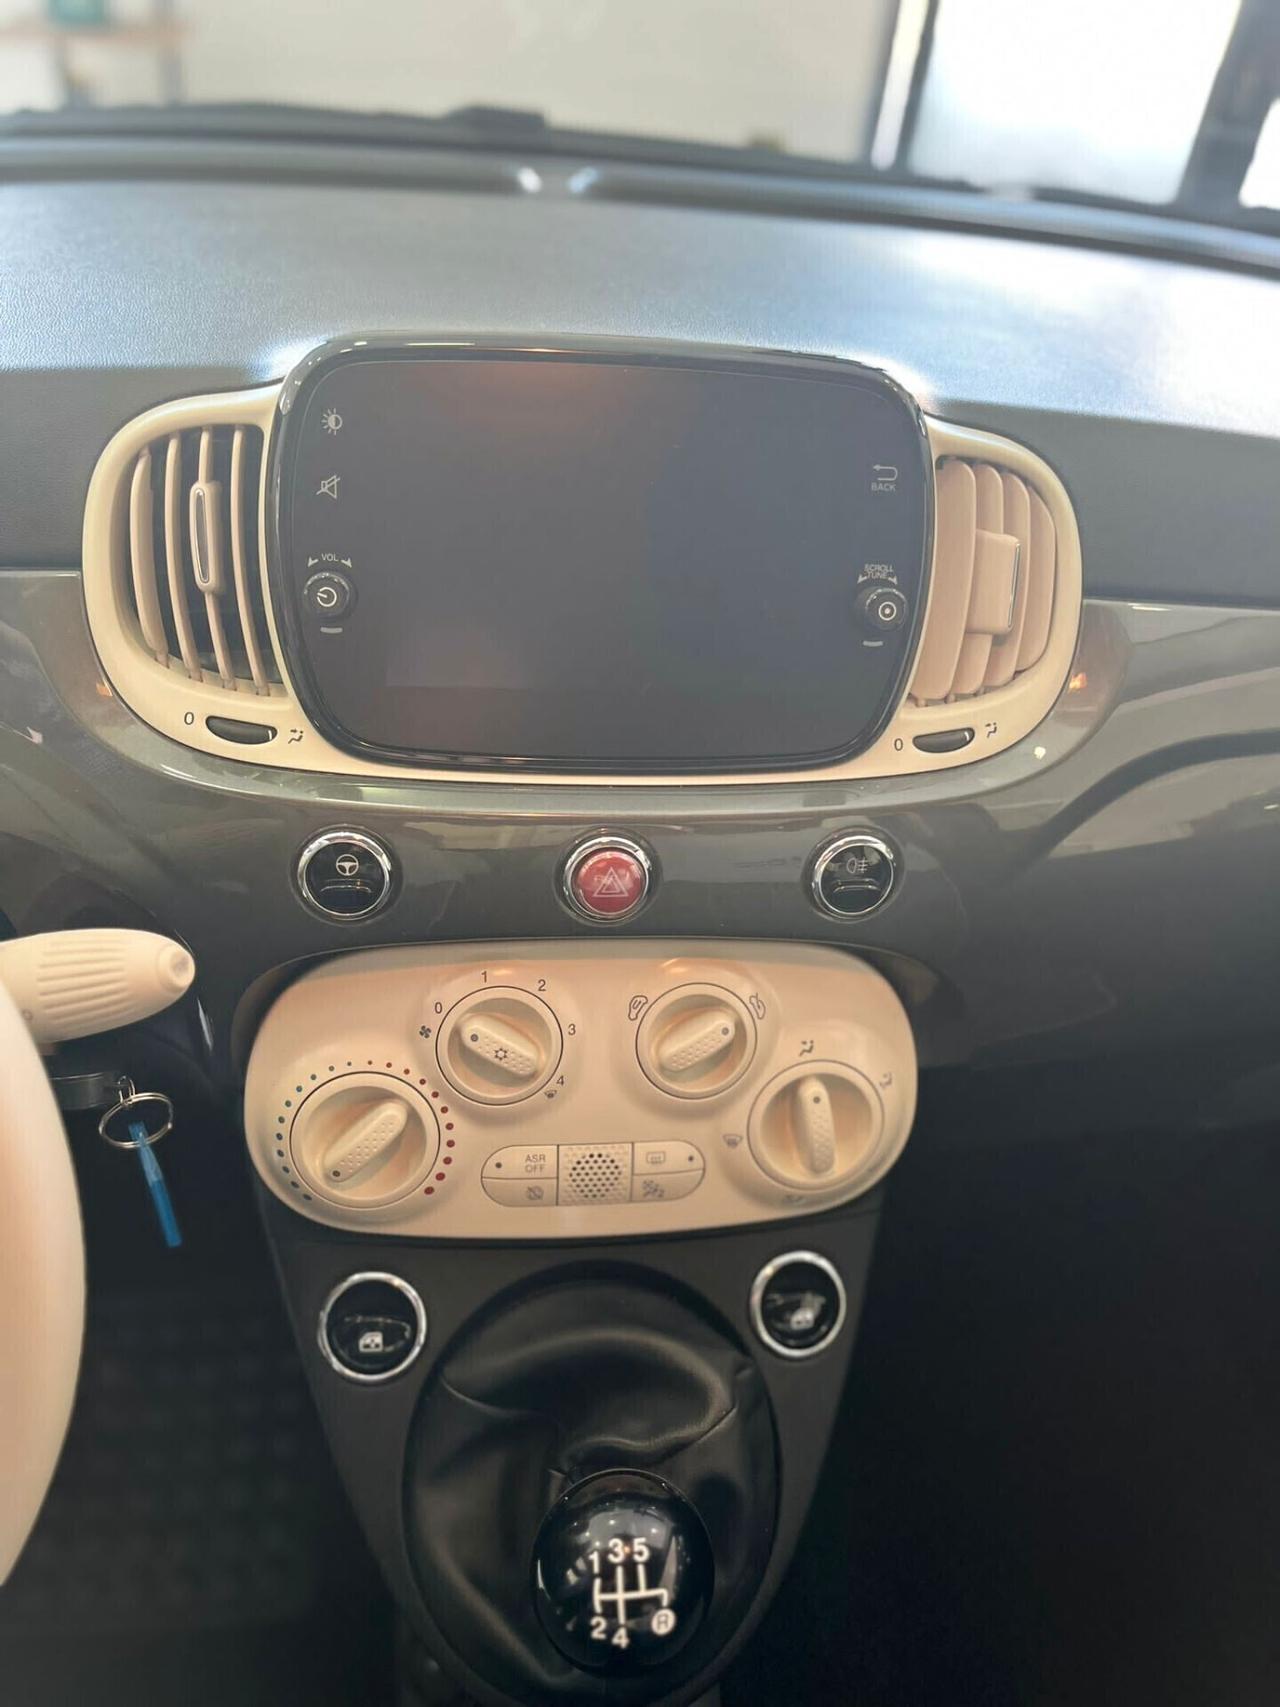 Fiat 500 1.2 Lounge 2019